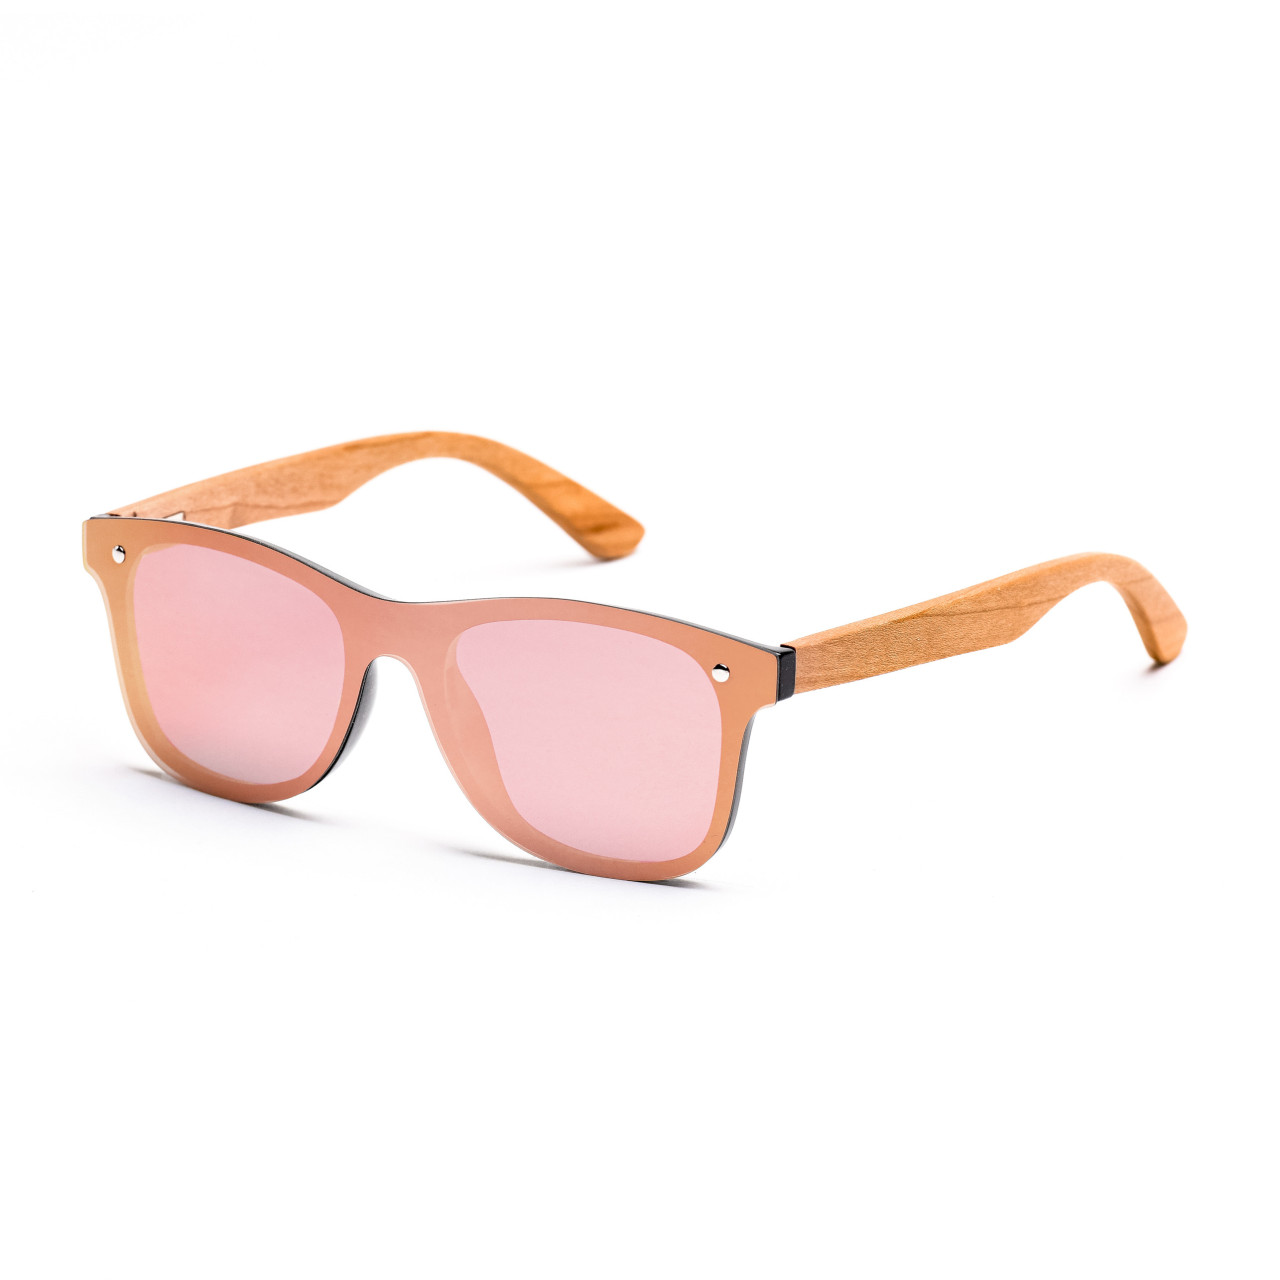 Brýle Luxury – Růžové čočky + třešeň